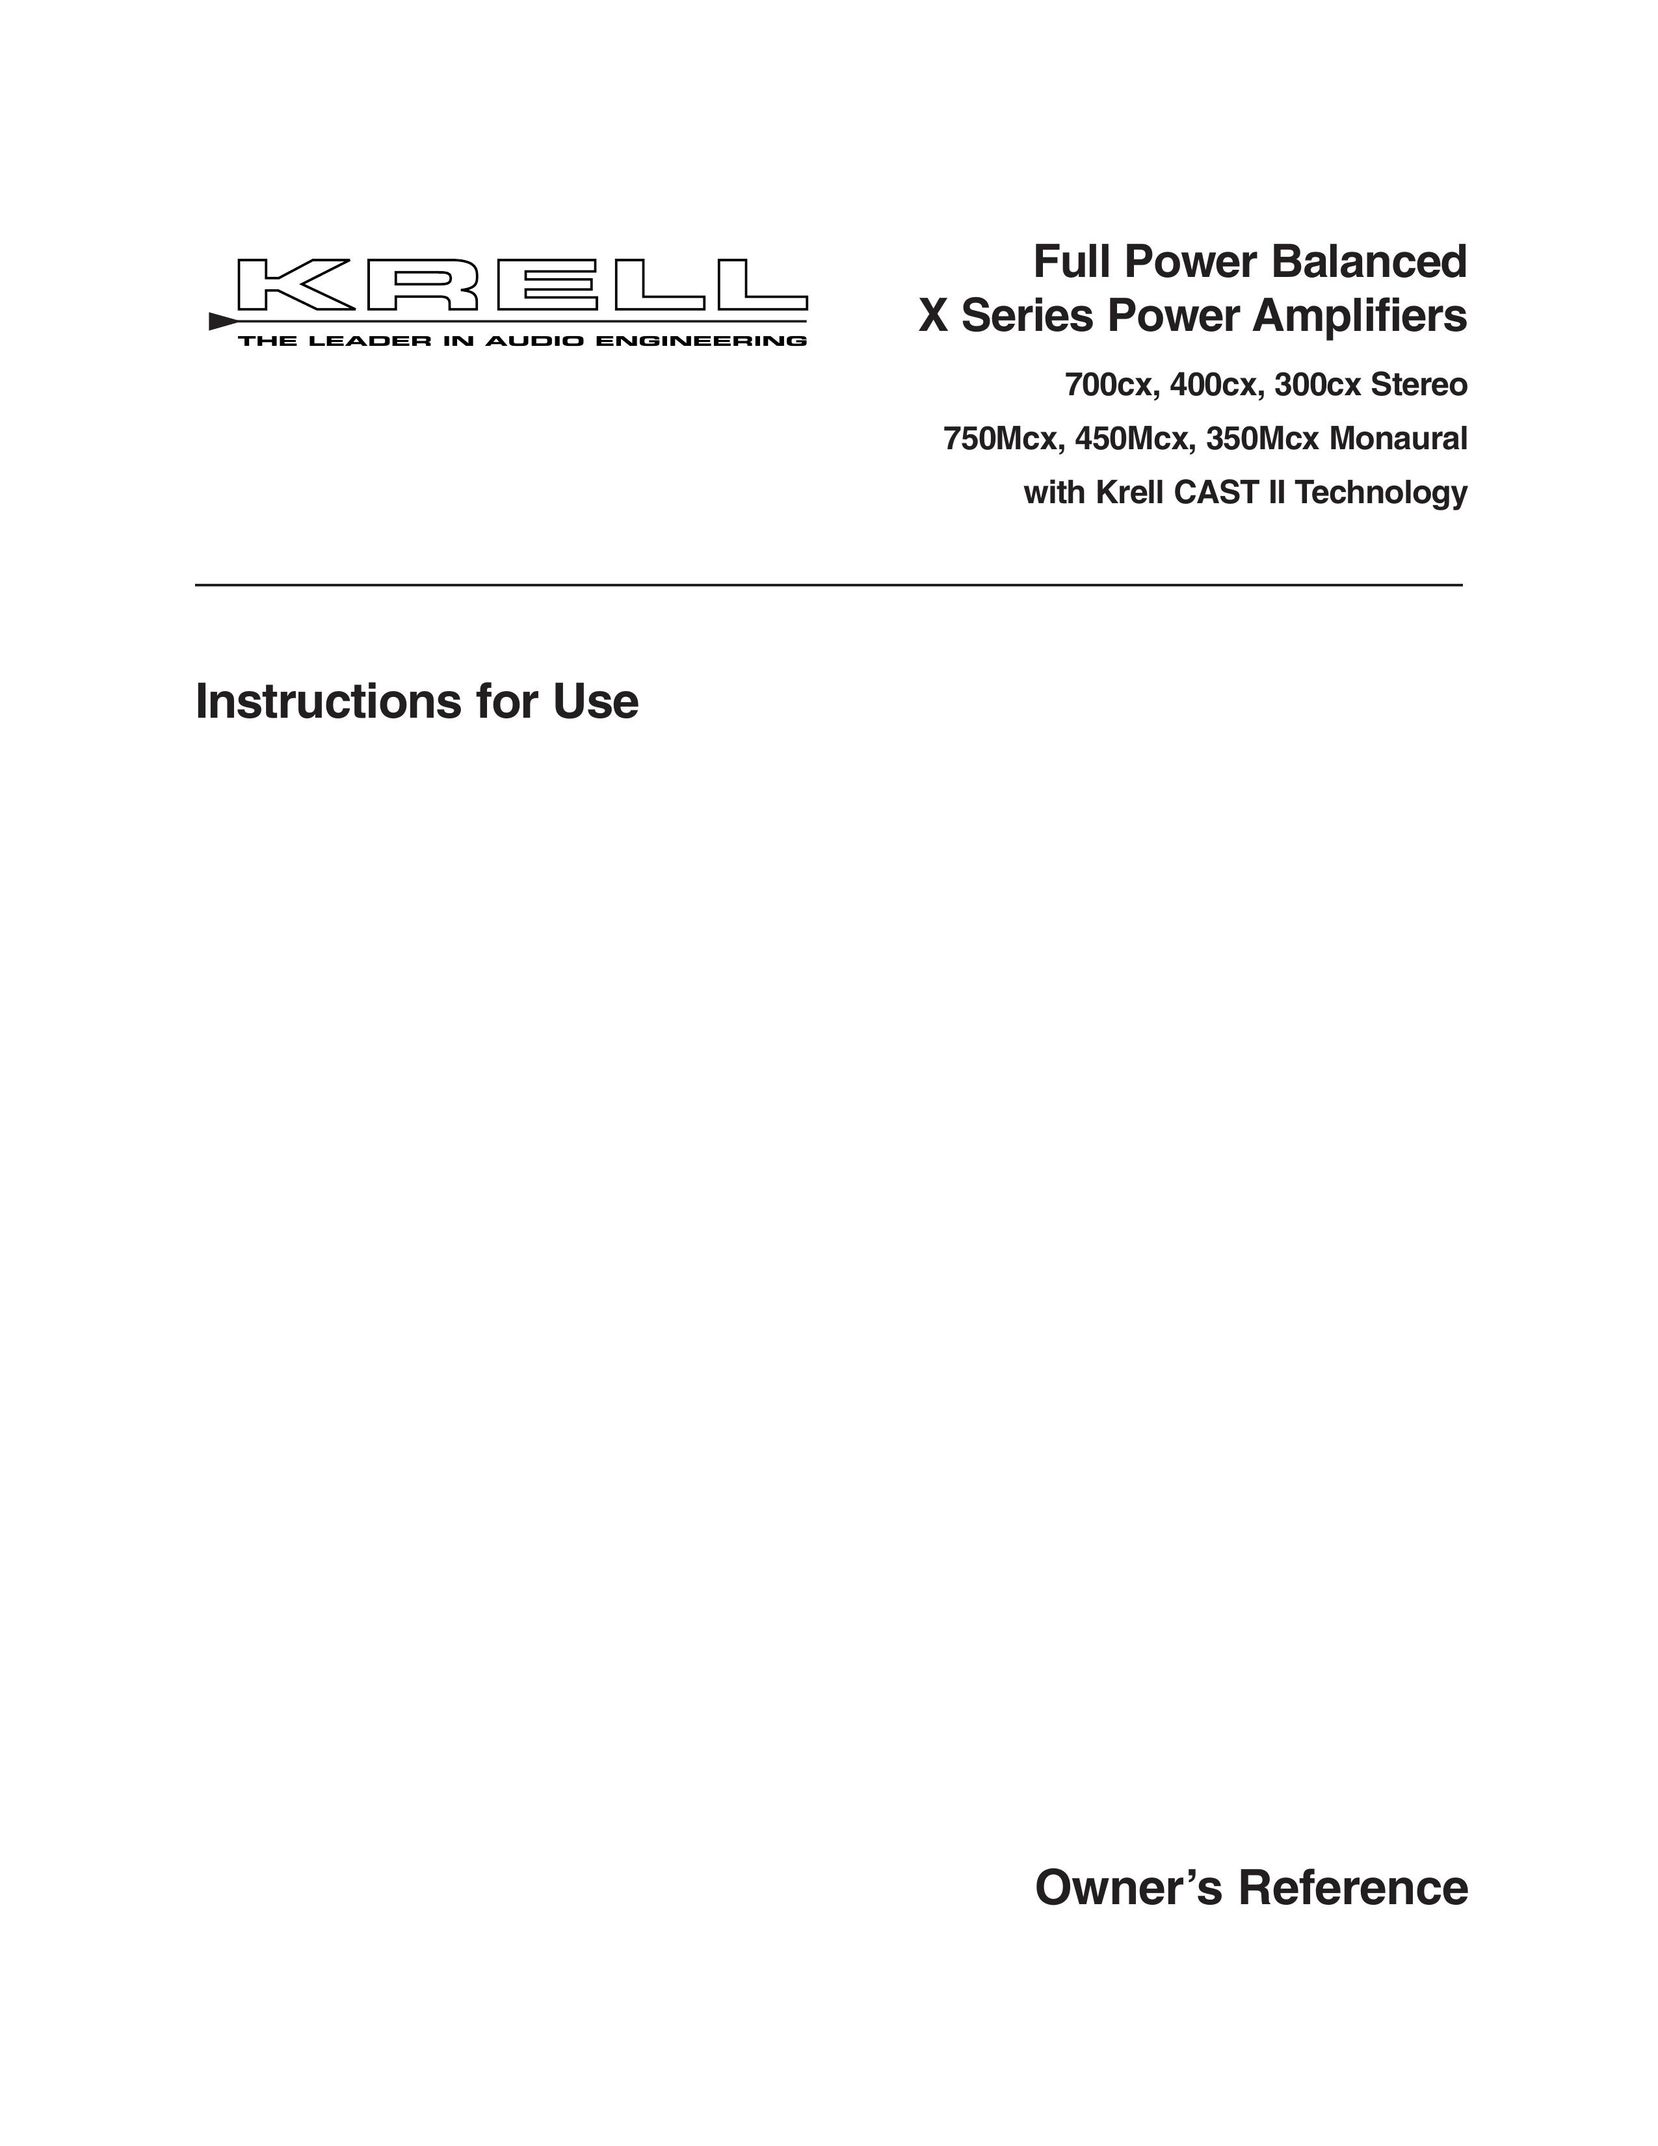 Krell Industries 700cx, 400cx, 300cx, 750Mcx, 450Mcx, 350Mcx Stereo Amplifier User Manual